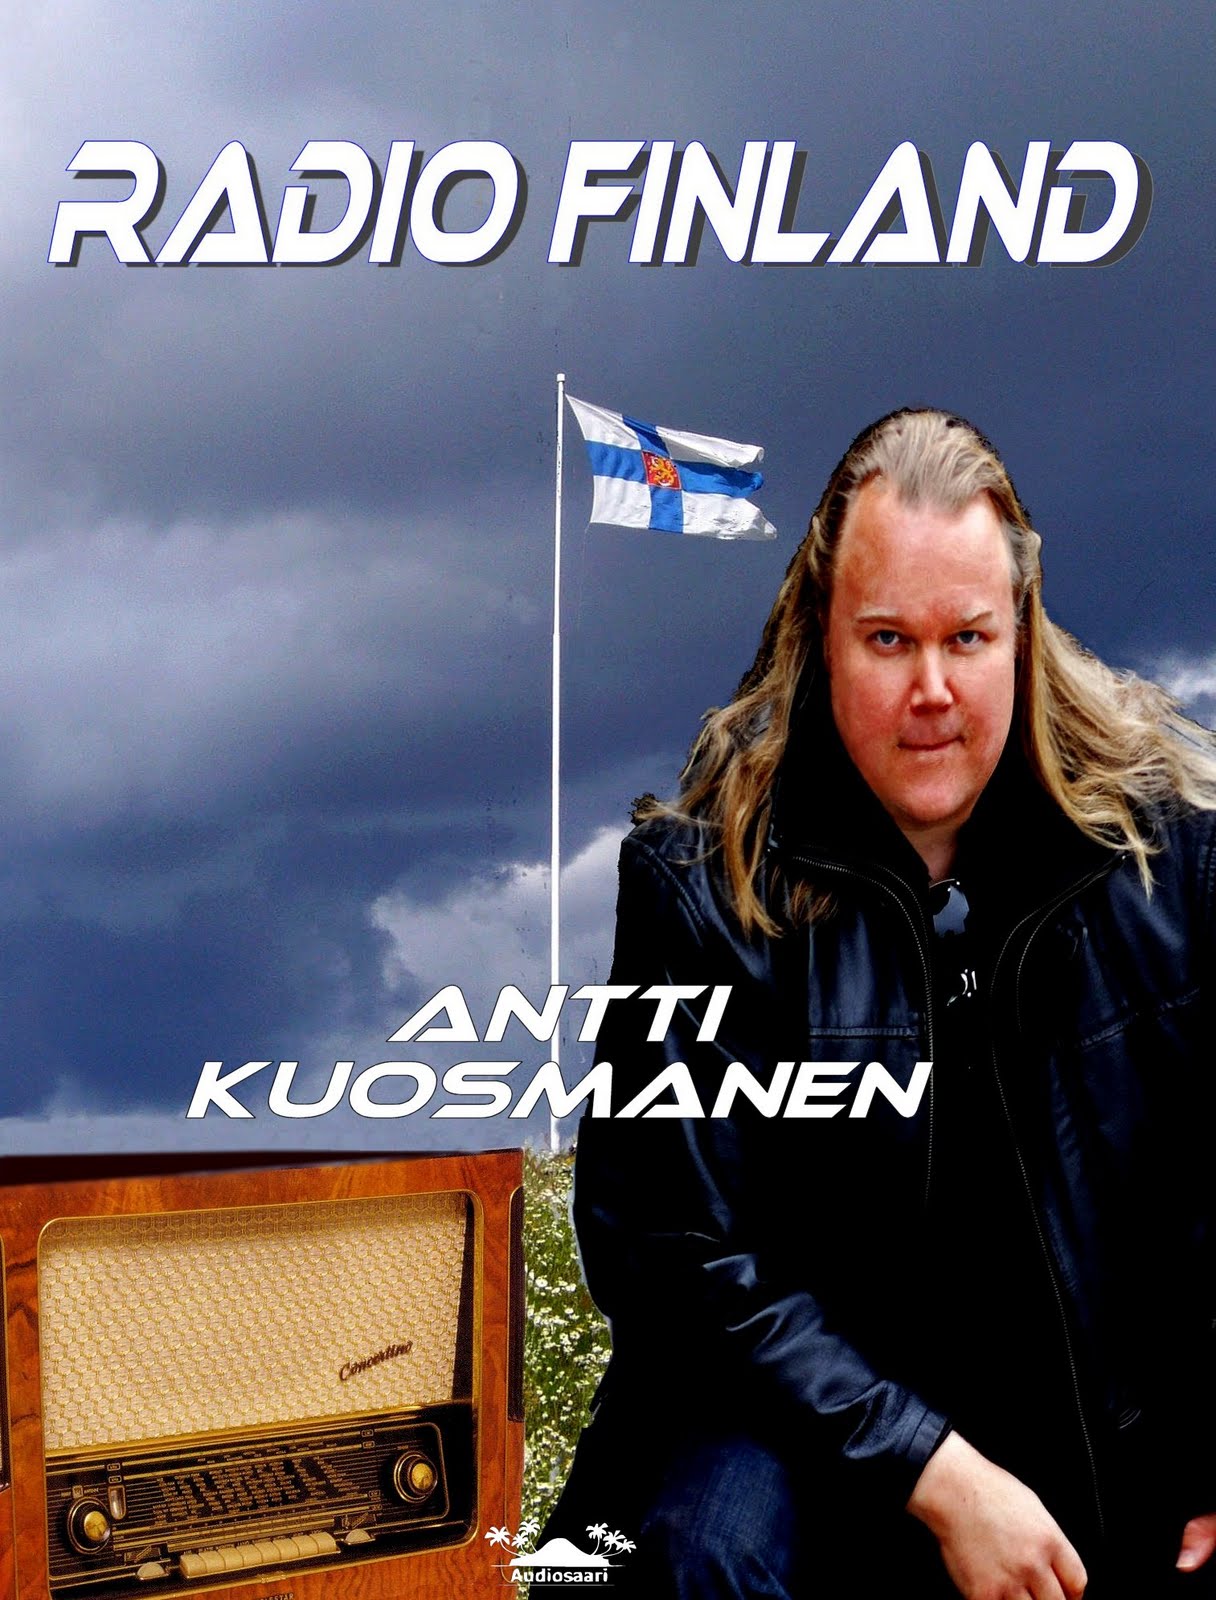 RADIO FINLAND